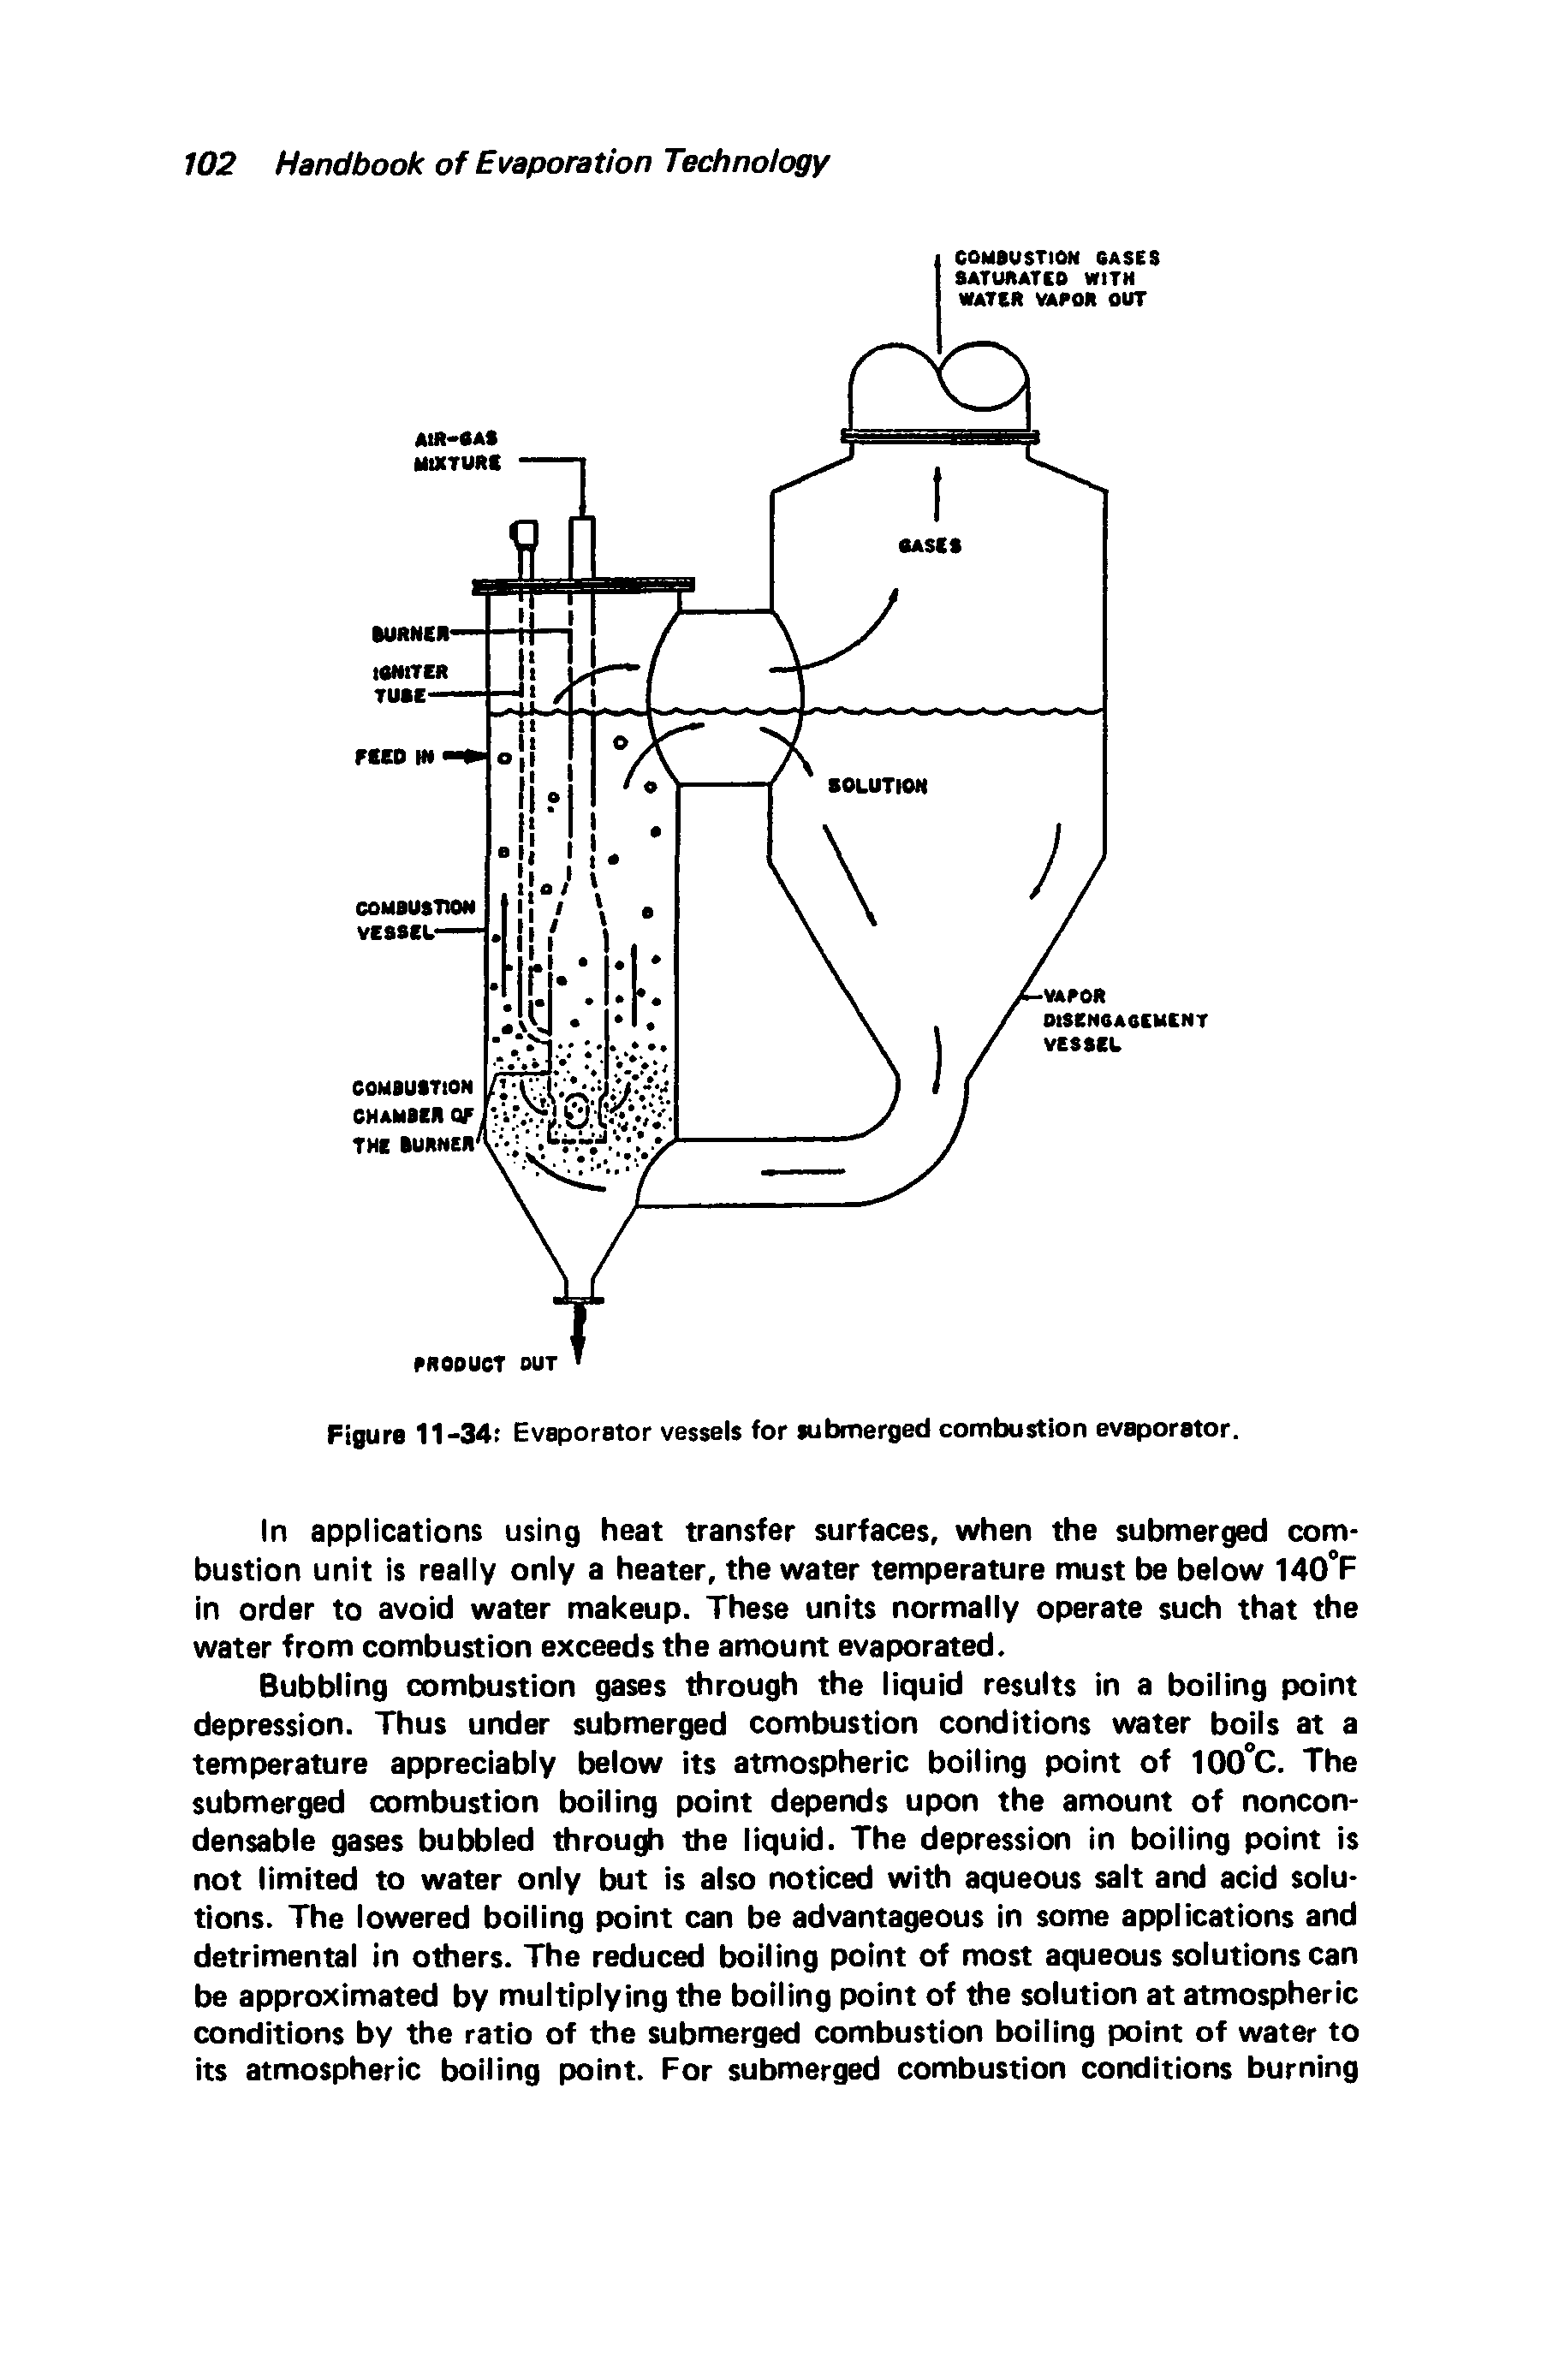 Figure 11-34 Evaporator vassals for submerged combustion evaporator.